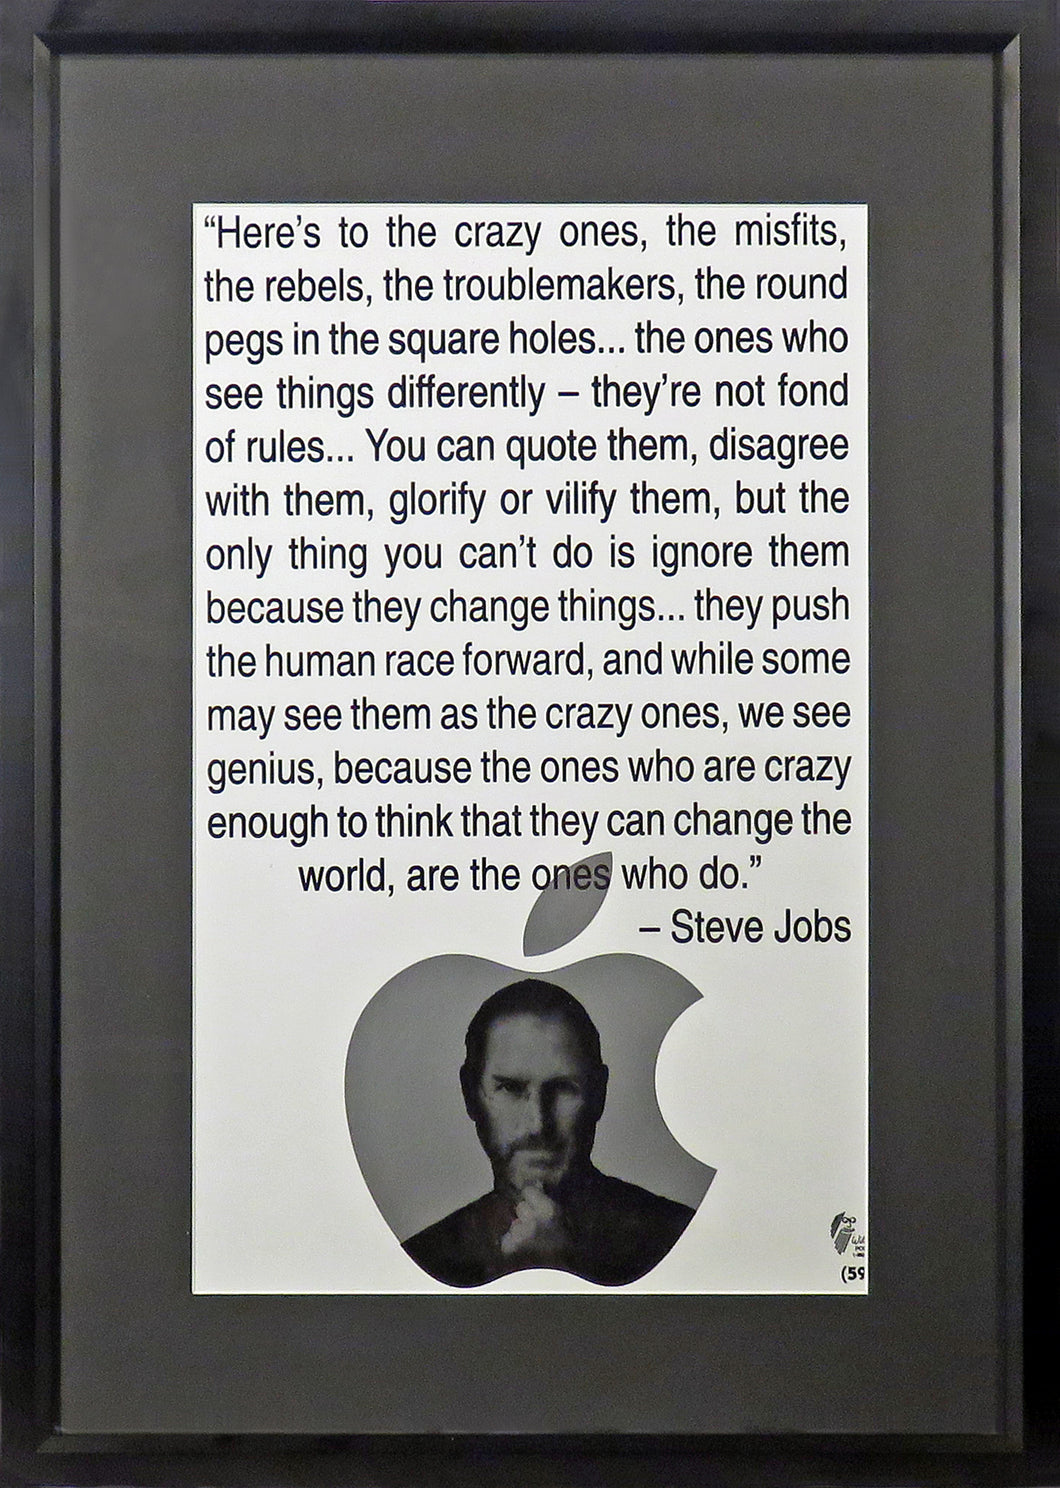 Steve Jobs “The Crazy Ones” Poster Framed  (Engraved Series)